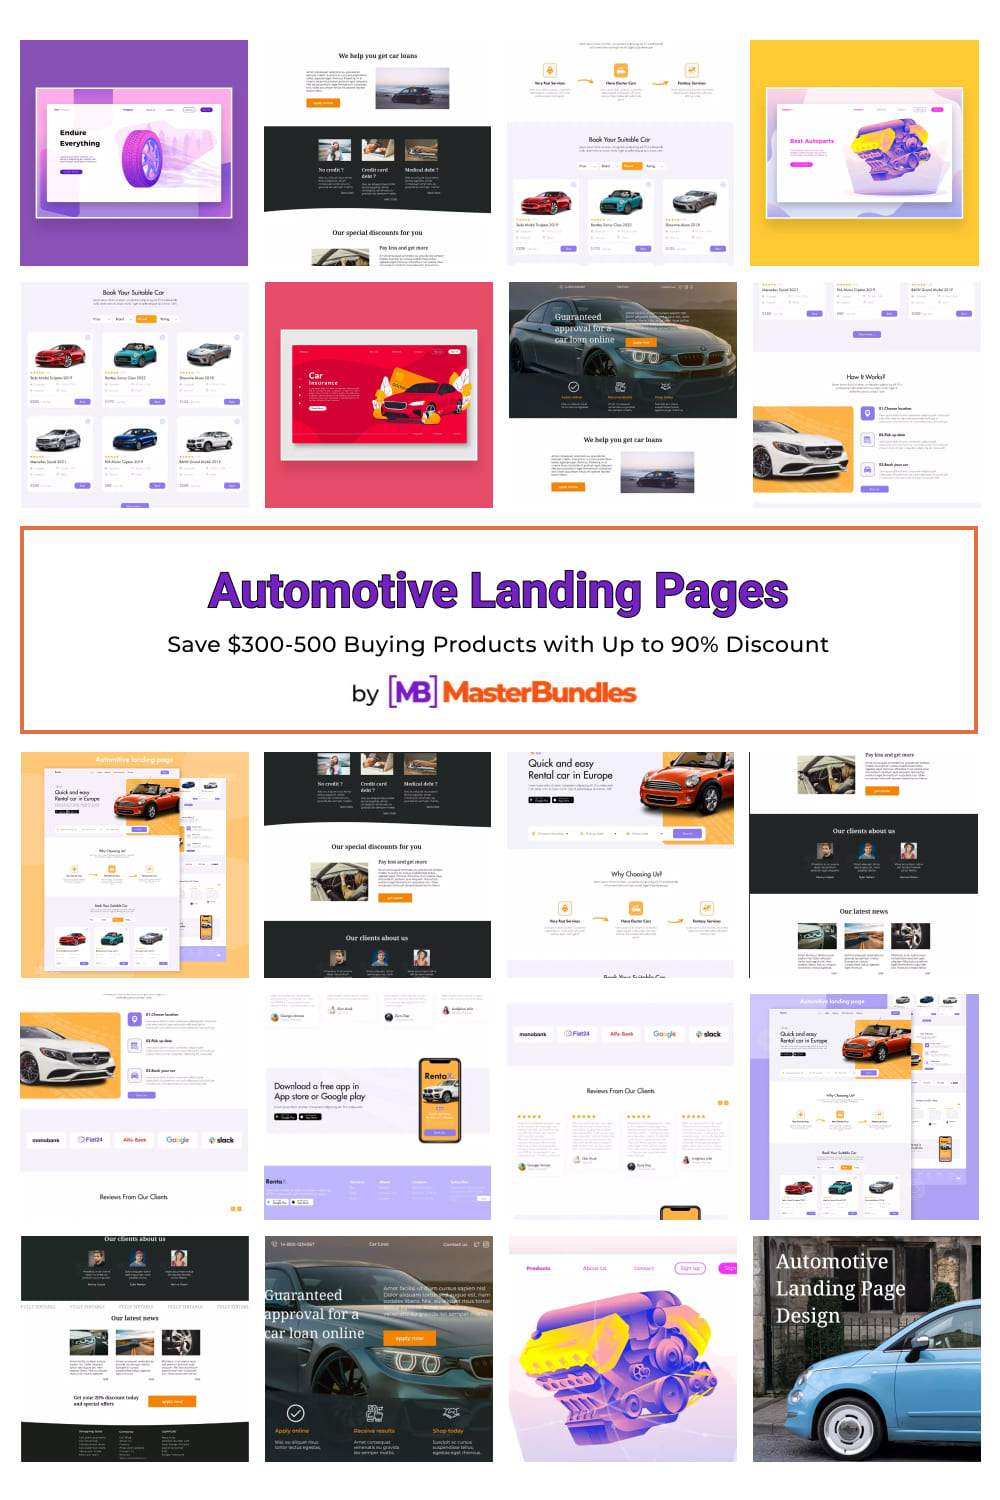 Automotive Landing Pages for Pinterest.